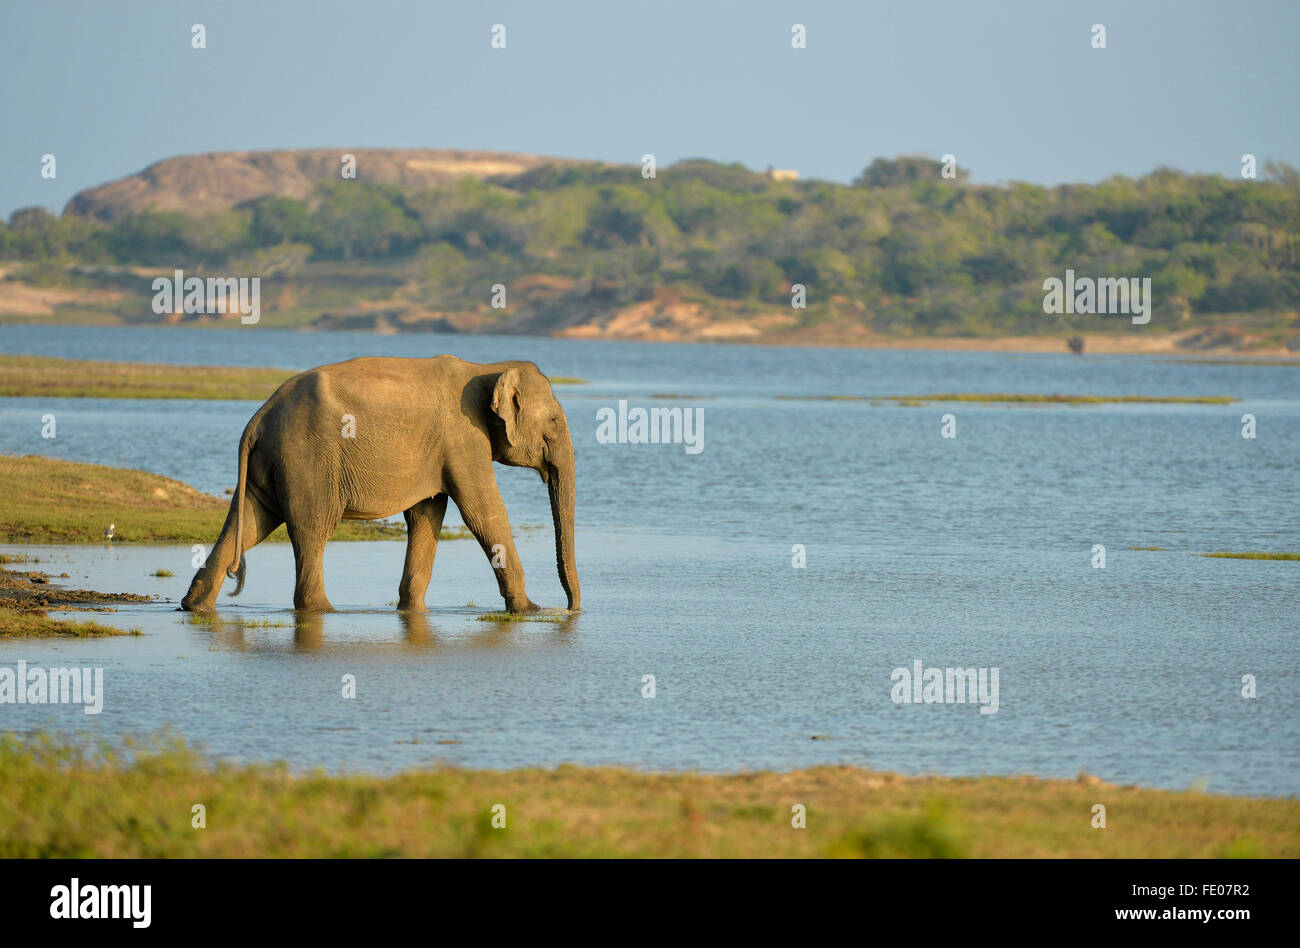 Sri Lanka elefante (Elephas maximus maximus) caminando en aguas poco profundas en el borde del lago, el Parque Nacional de Yala, Sri Lanka, marzo Foto de stock